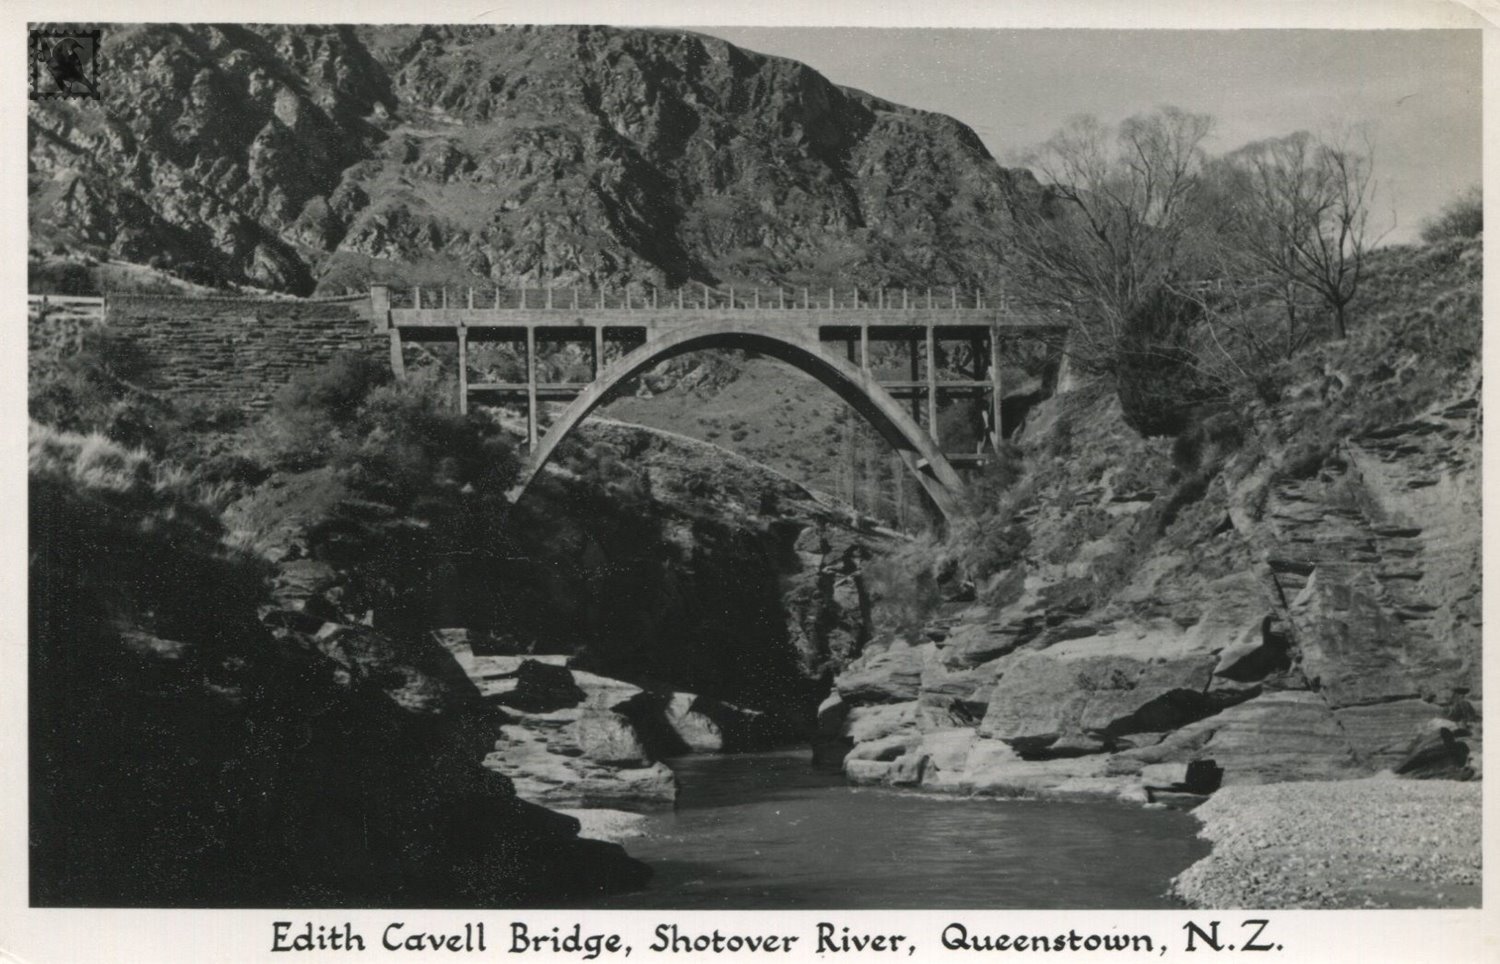 Queenstown-Edith Cavell Bridge, Shotover River